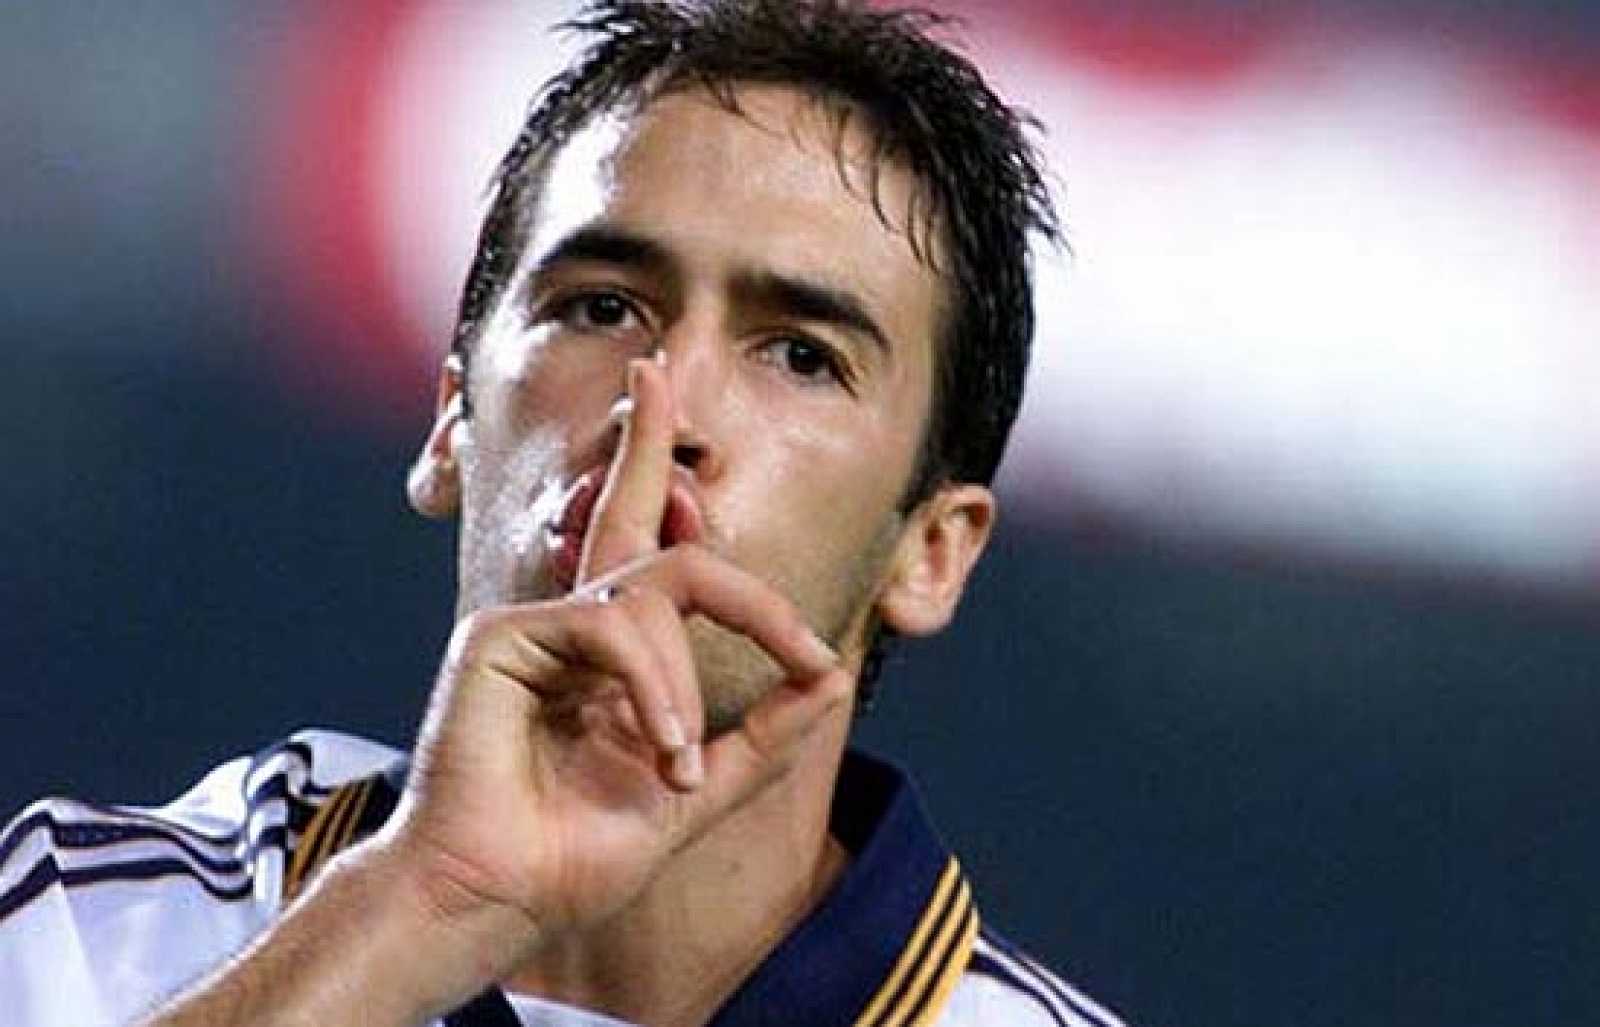 Raul silences the Camp Nou